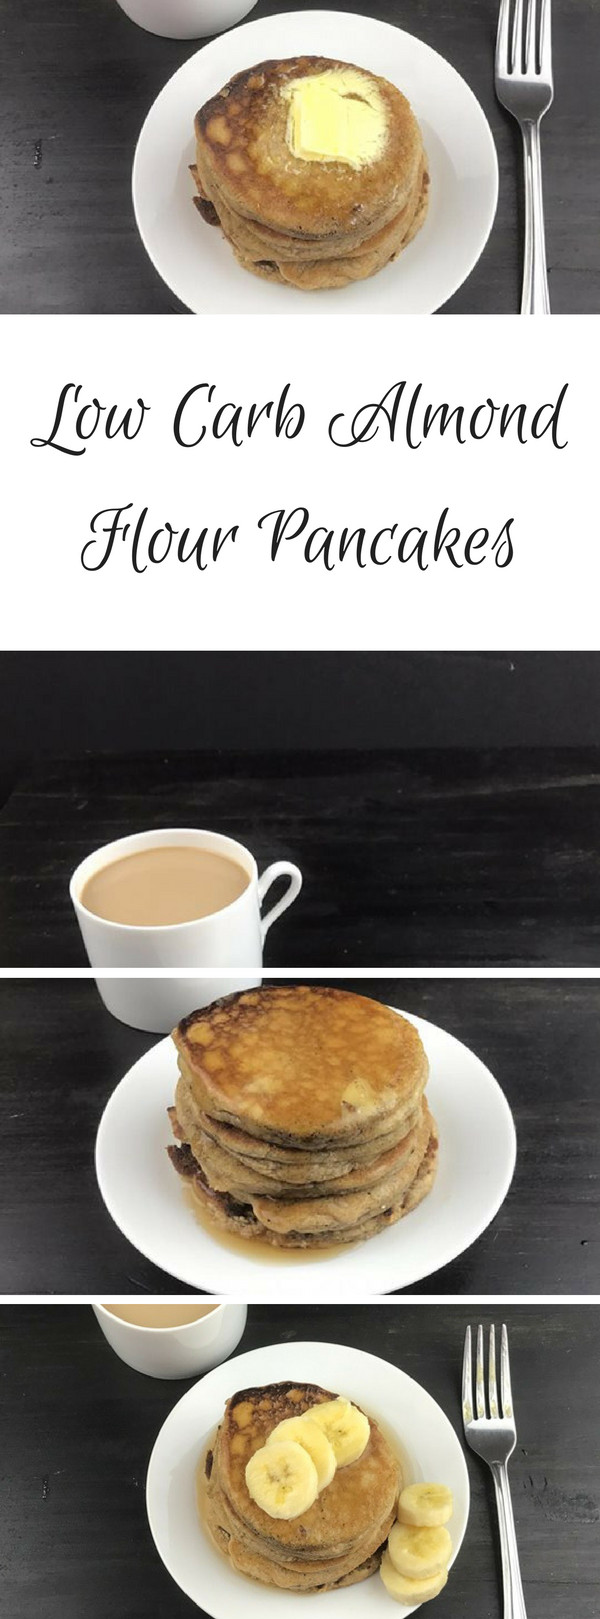 Low Carb Pancakes Almond Flour
 Low Carb Almond Flour Pancakes ⋆ by Pink